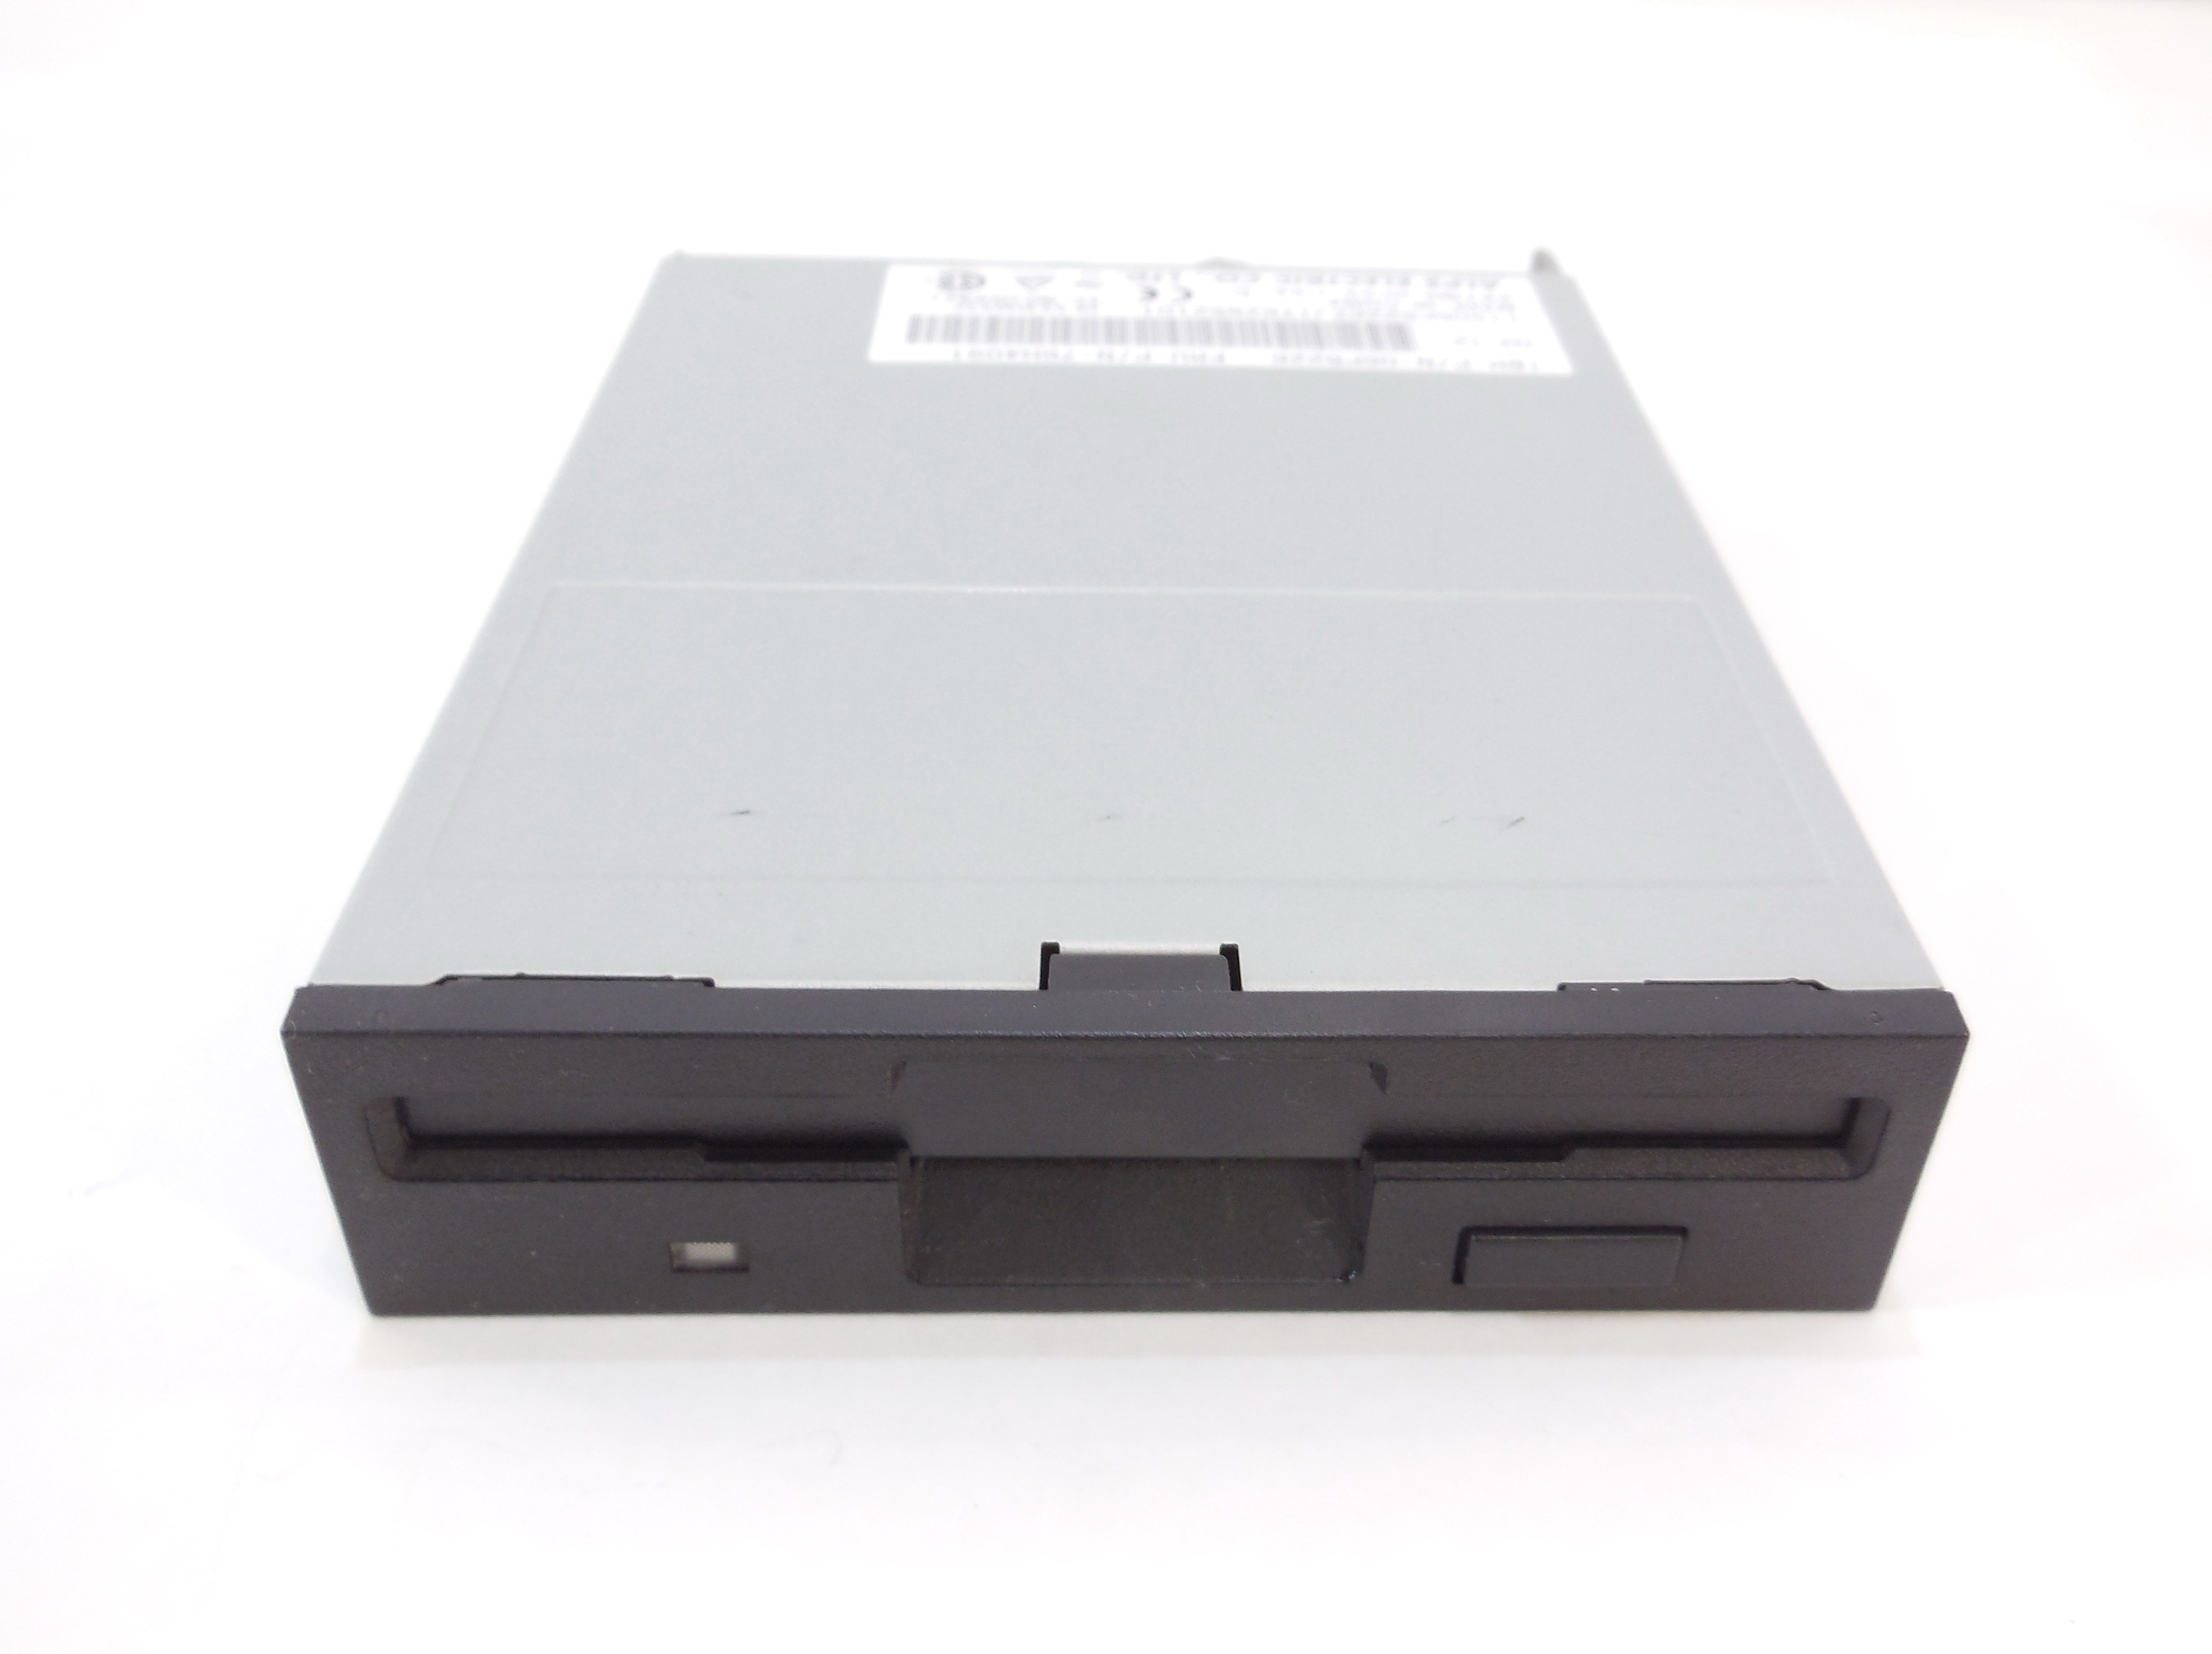 Накопители гибких. Флоппи дисковод 1.44MB 3.5" Teac Black. Ривод для дискет FDD FDD-3,5"-1,44mb. Дисковод FDD 3,5" Teac Black. FDD 3,5" дисковод внешний USB, модель FD-05pub, Espada.